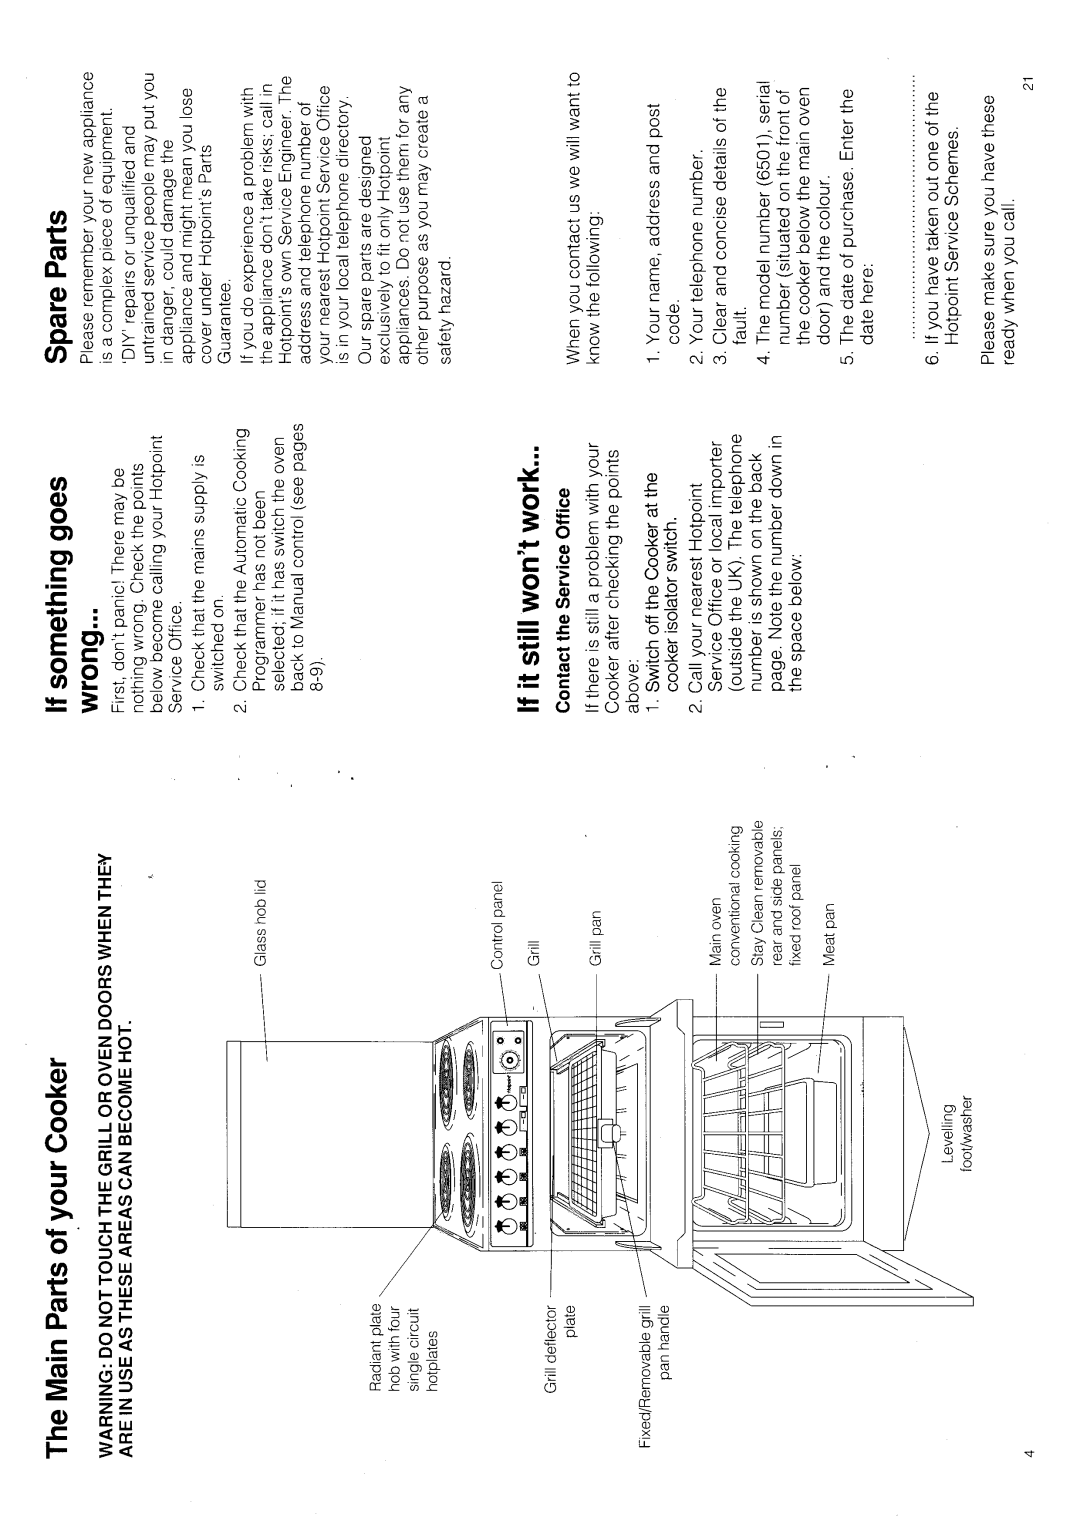 Hotpoint 6501 manual 